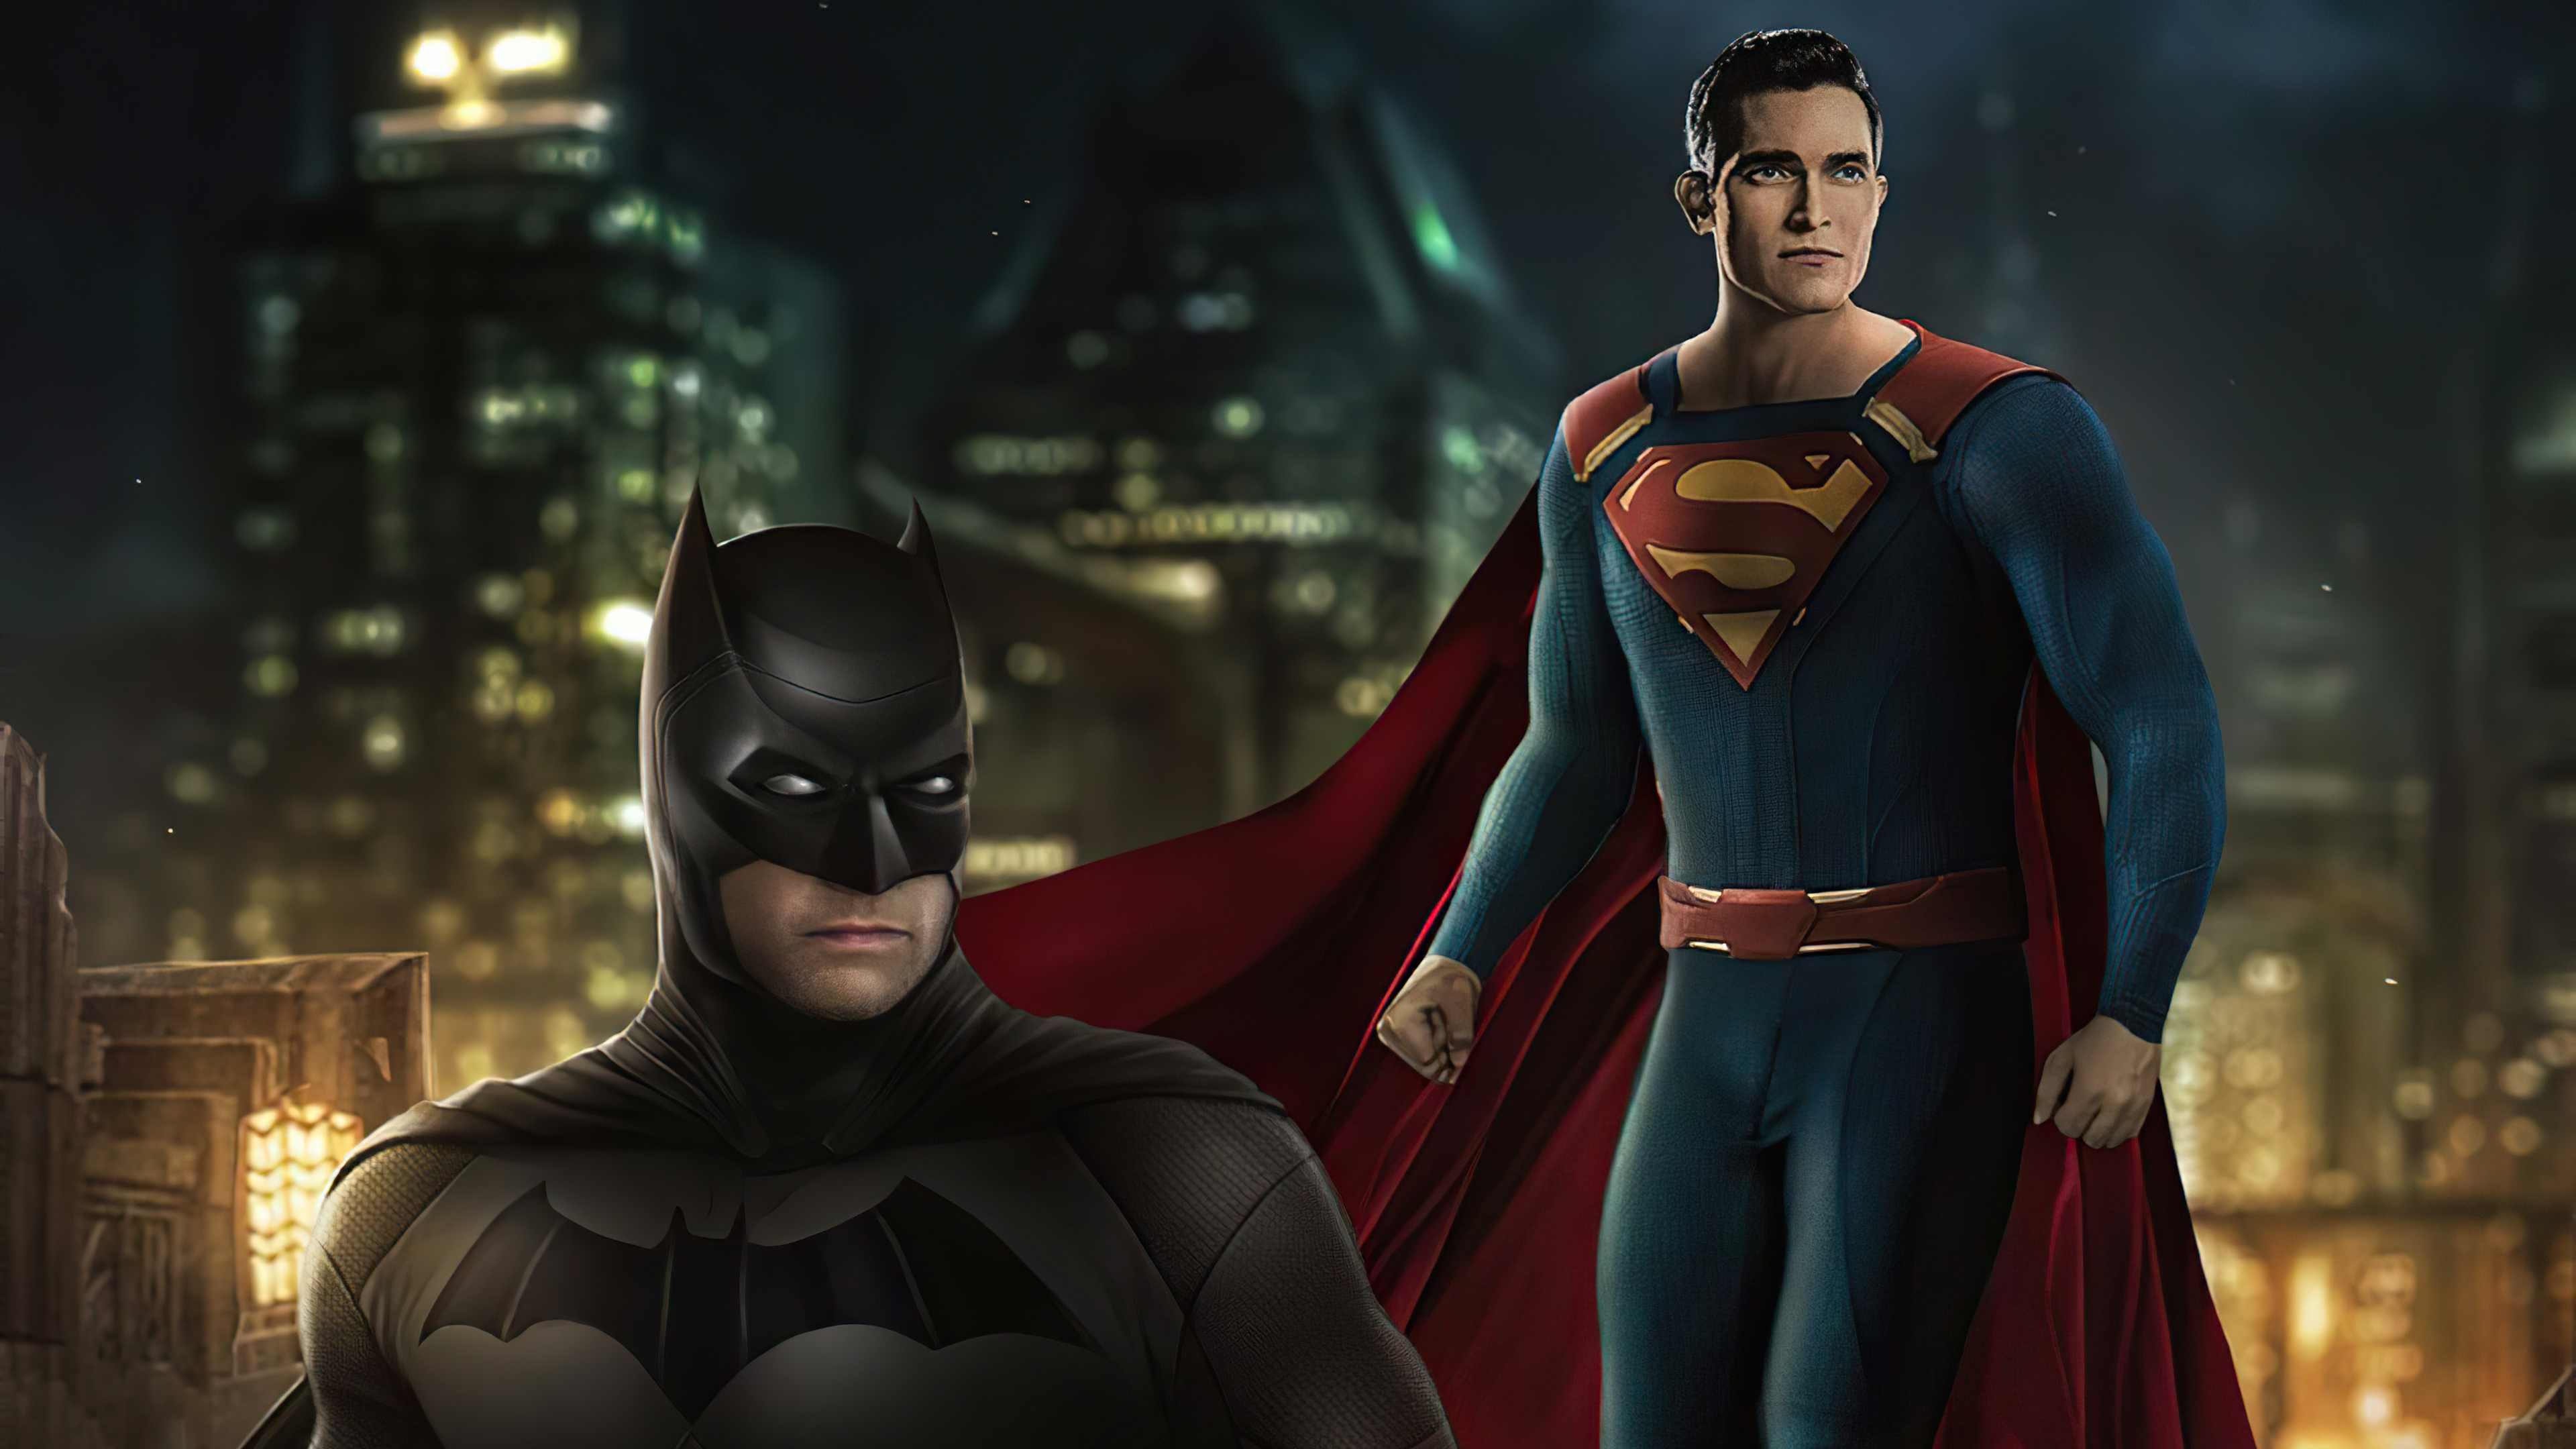 Batman vs superman 4k movie download - pasetank